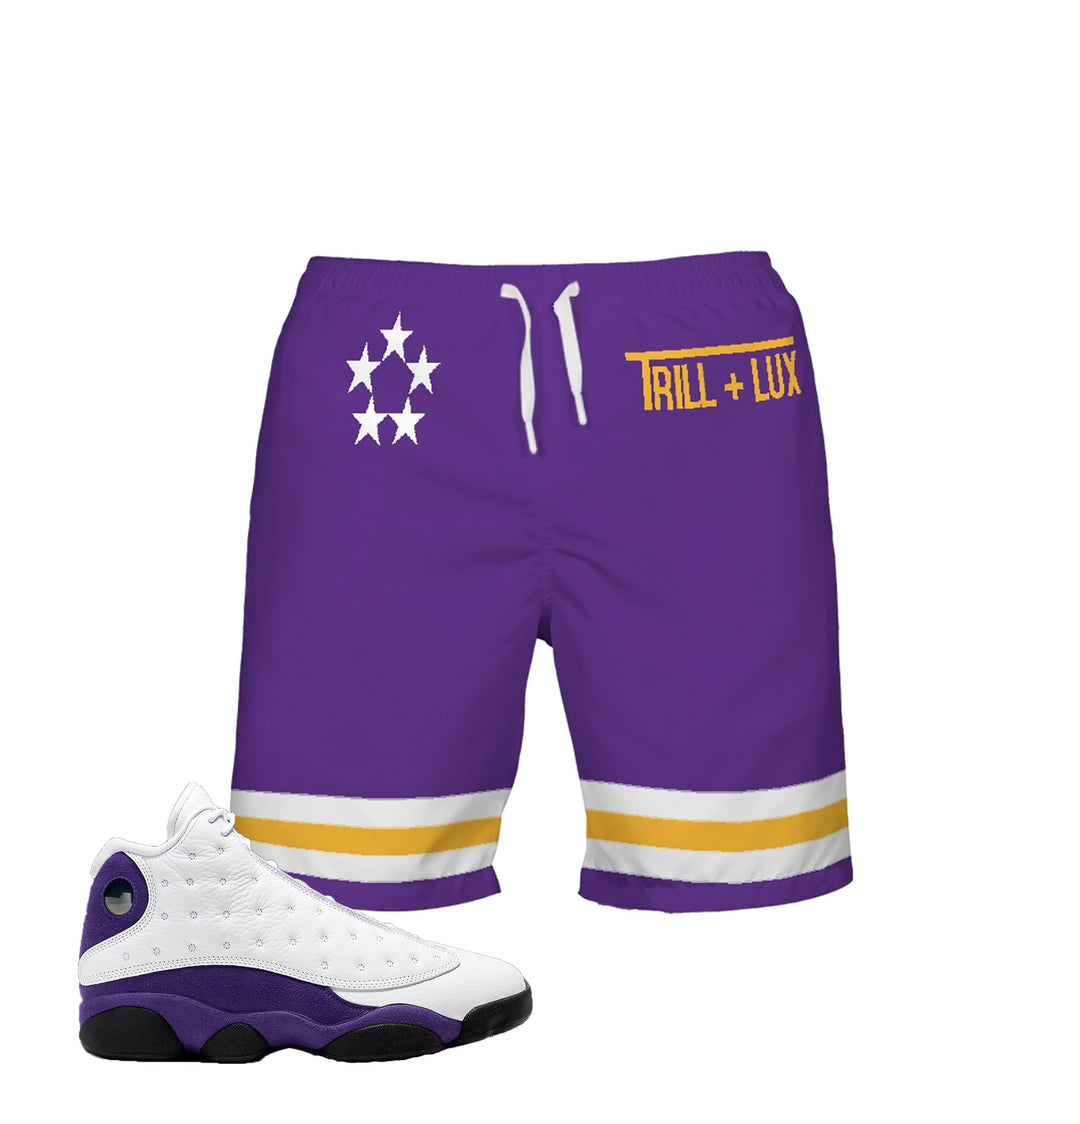 Trill Laker Purple | Retro Jordan 13 Colorblock Swim Trunks | Swim fashion | Designed to Match Air Jordan 13 Sneakers Active XIII